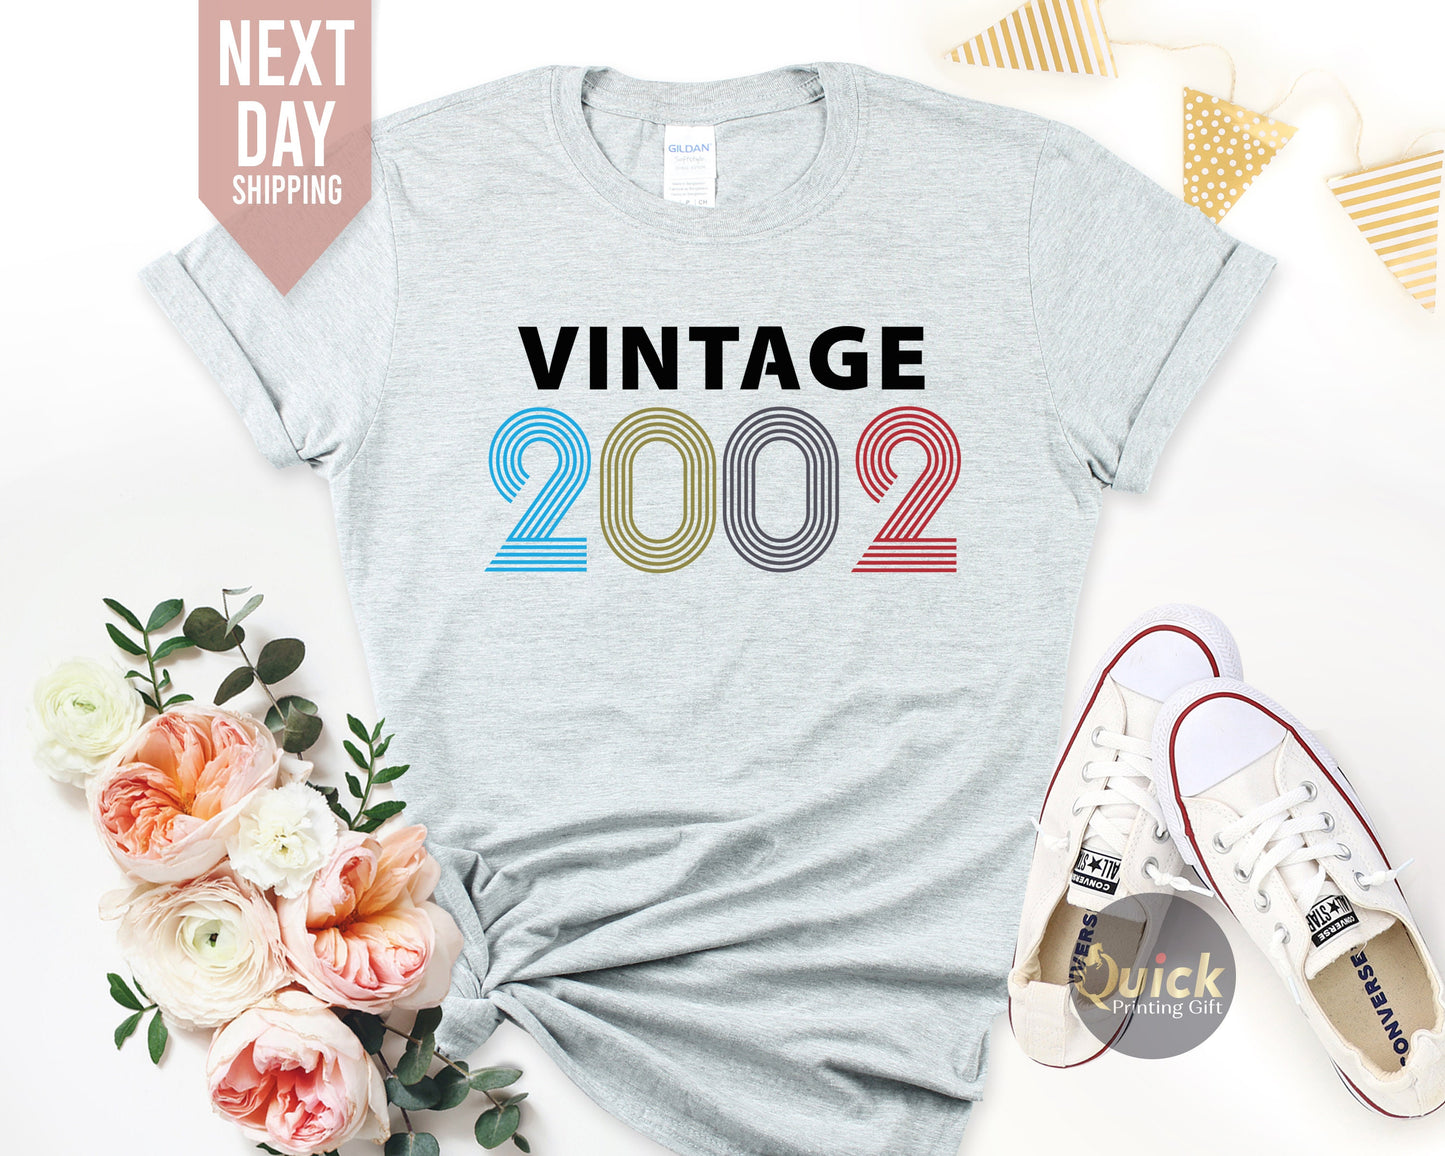 Vintage 2002 T-Shirt